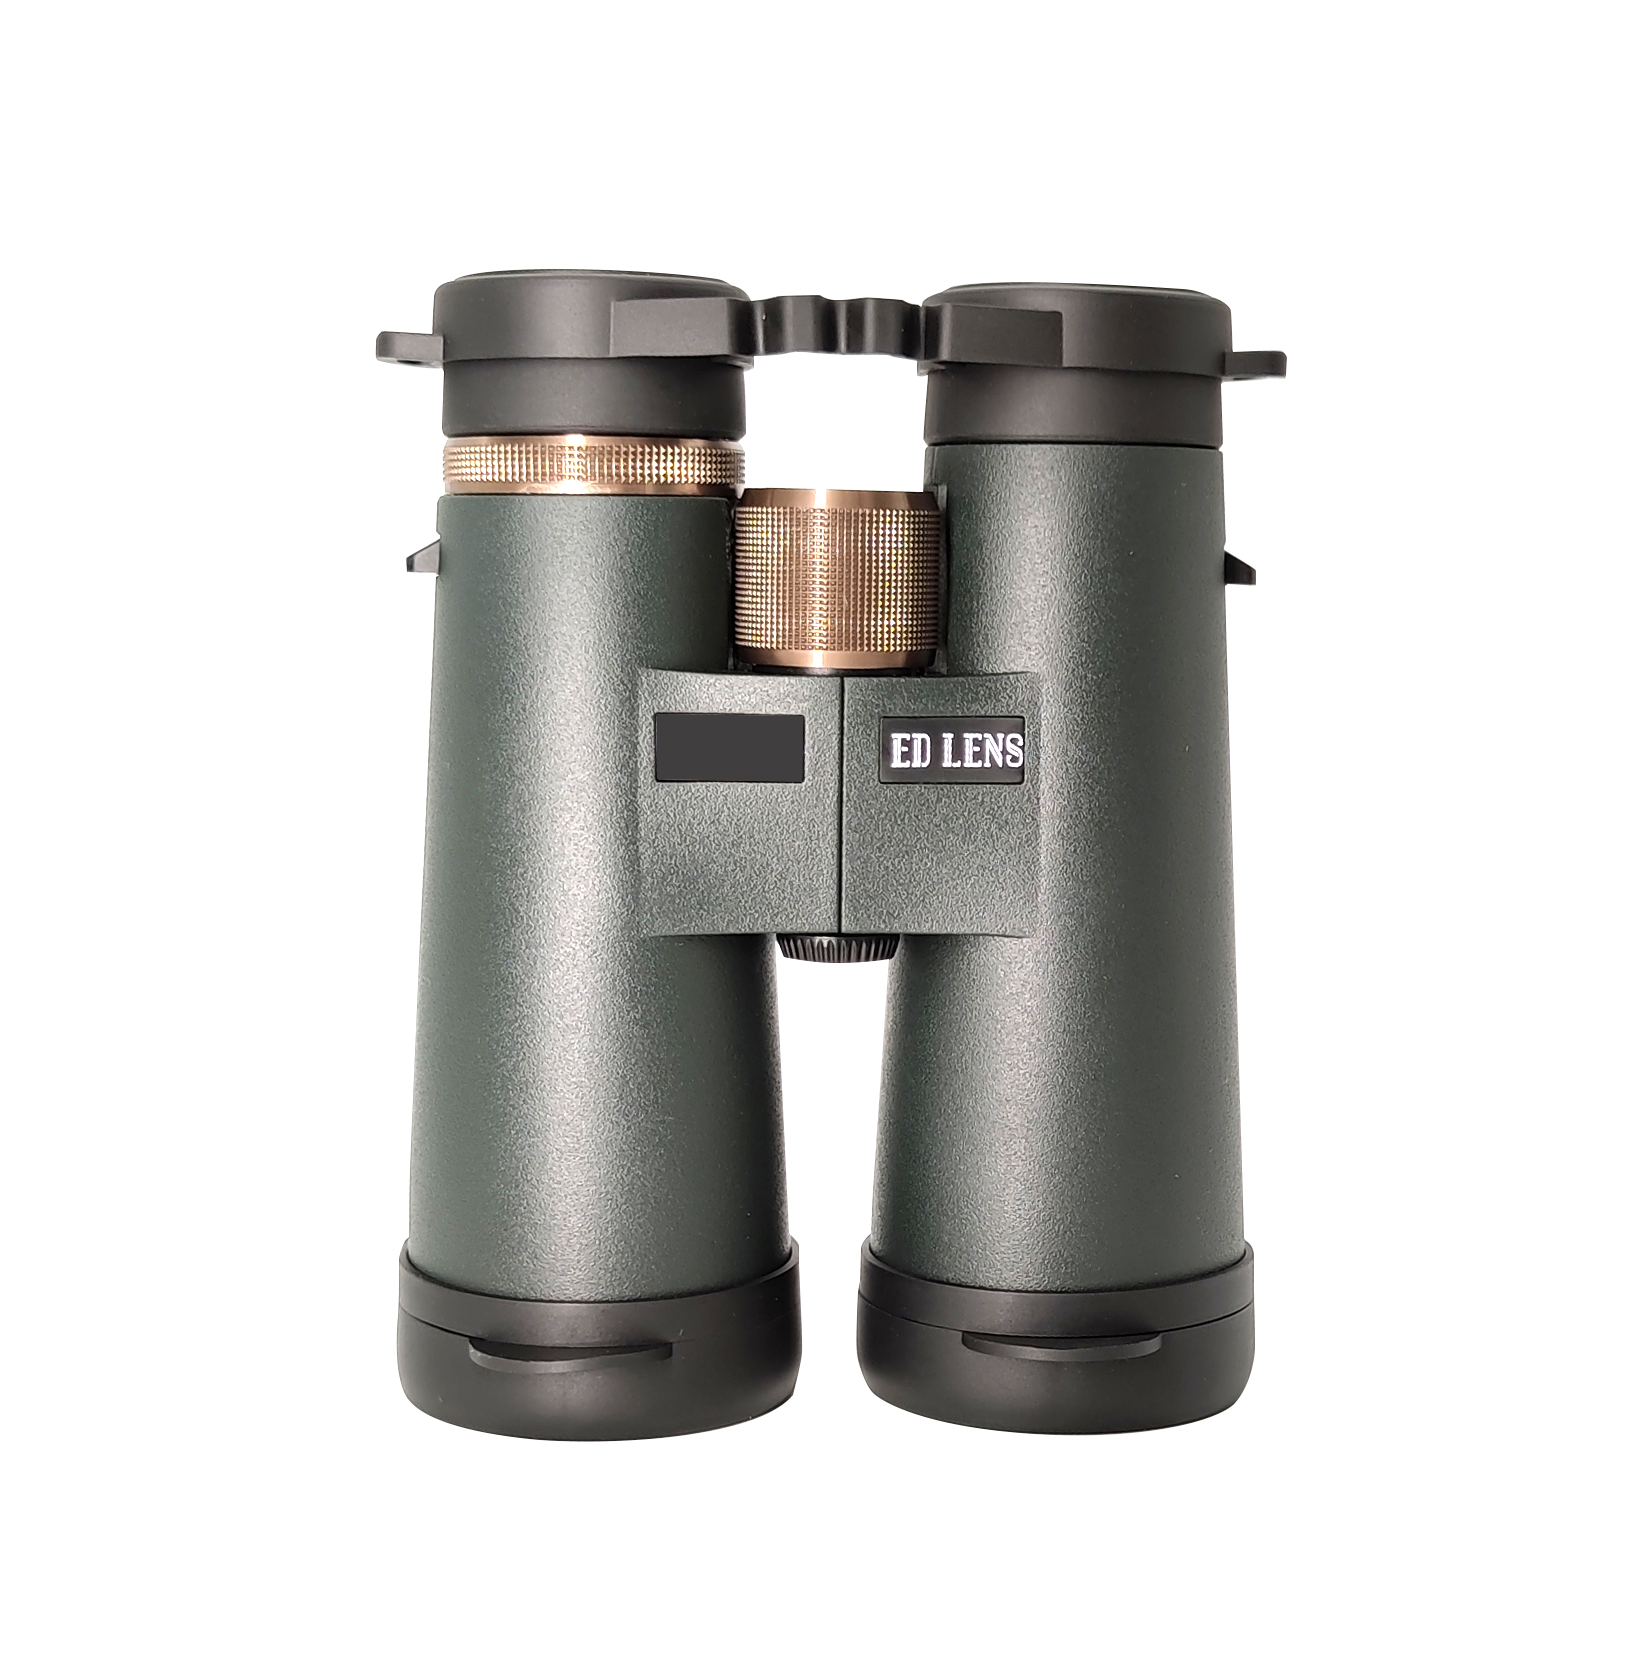 The button on Canon’s image-stabilized binoculars unlocked superhuman sight - The Verge